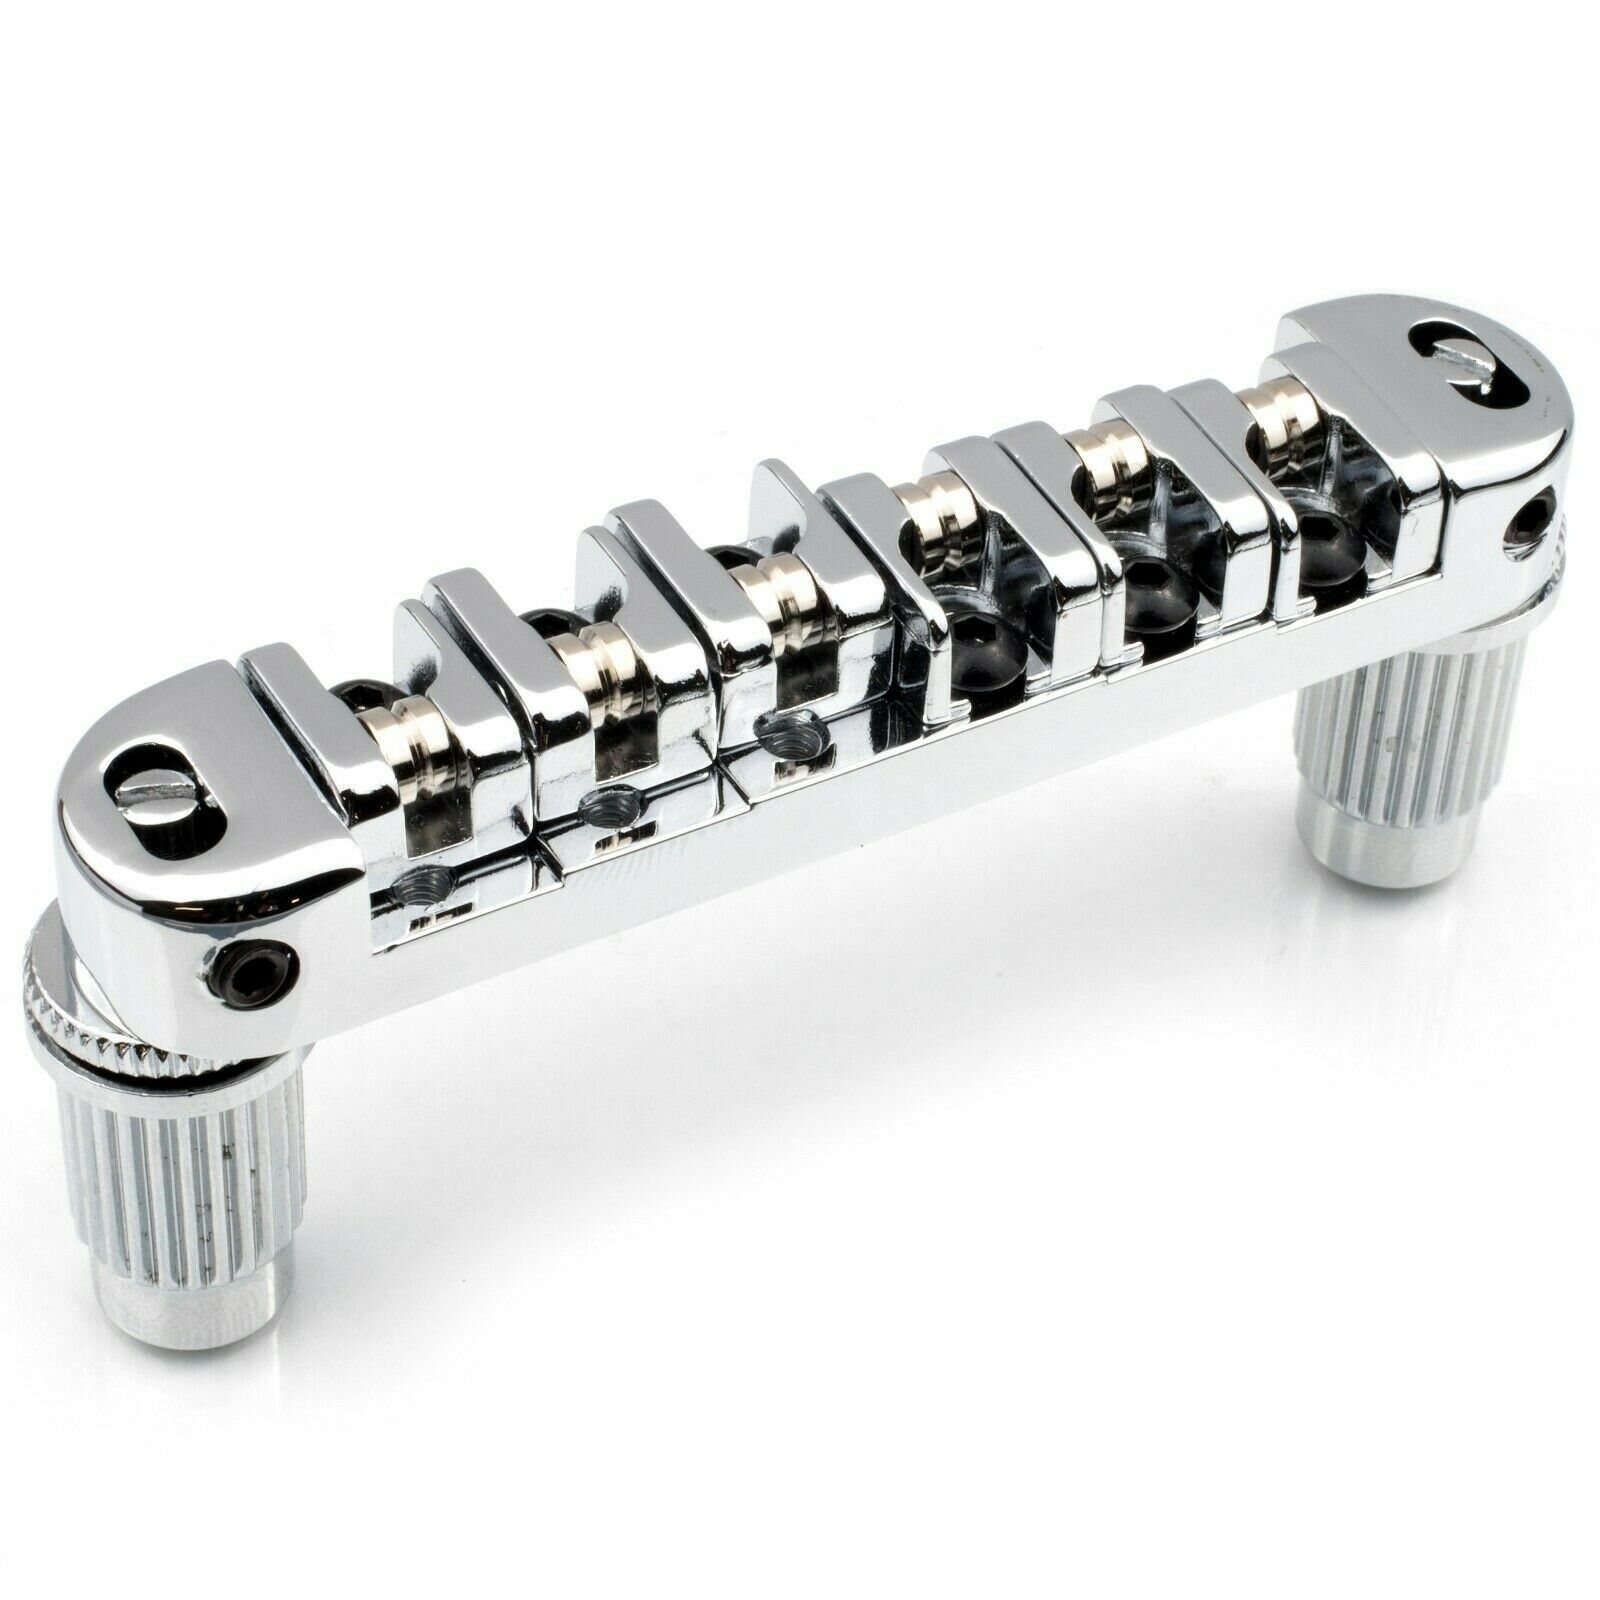 Wilkinson Locking Roller Bridge For Epiphone Les Paul Guitar- Chrome